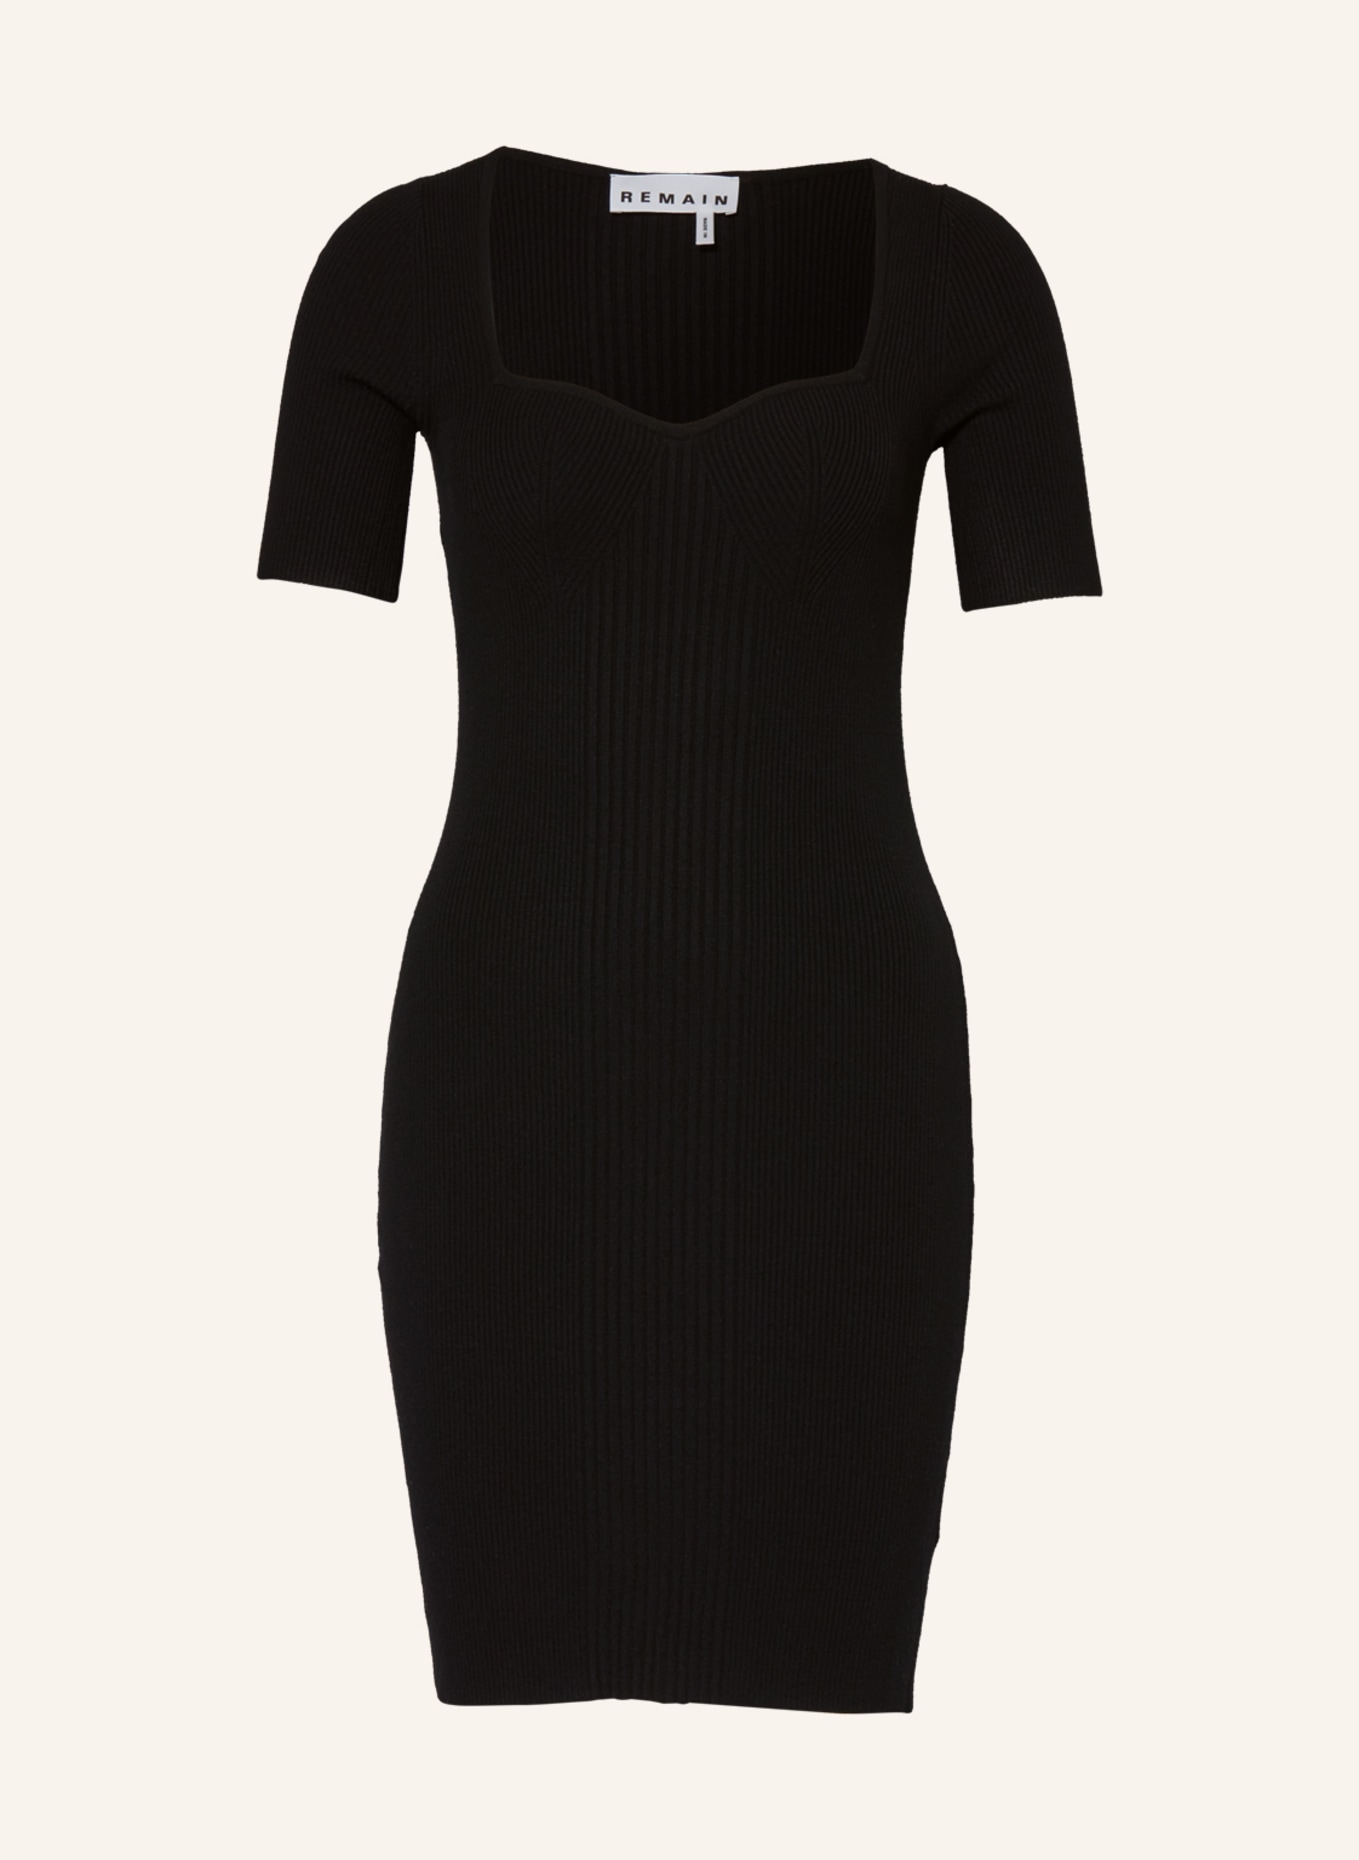 REMAIN Knit dress, Color: BLACK (Image 1)